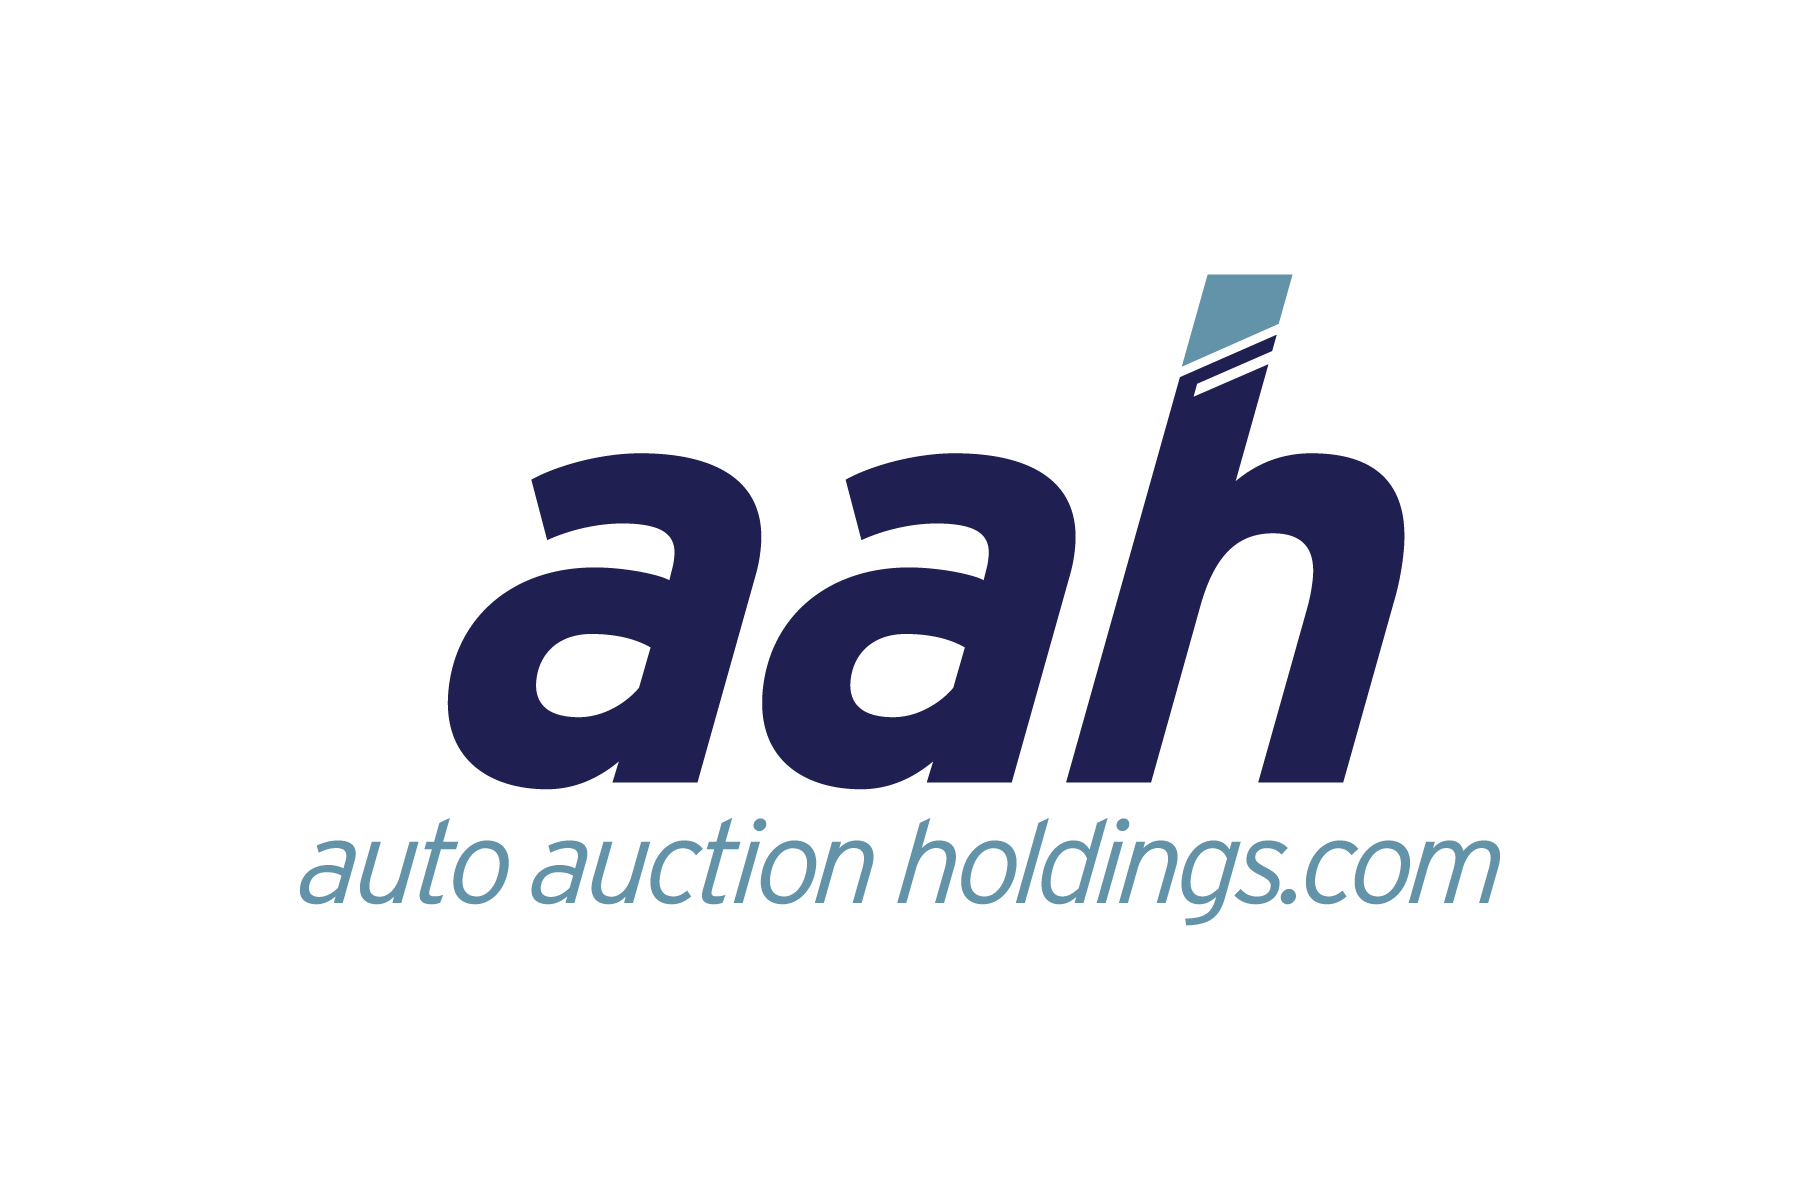 Auto Auction Holdings